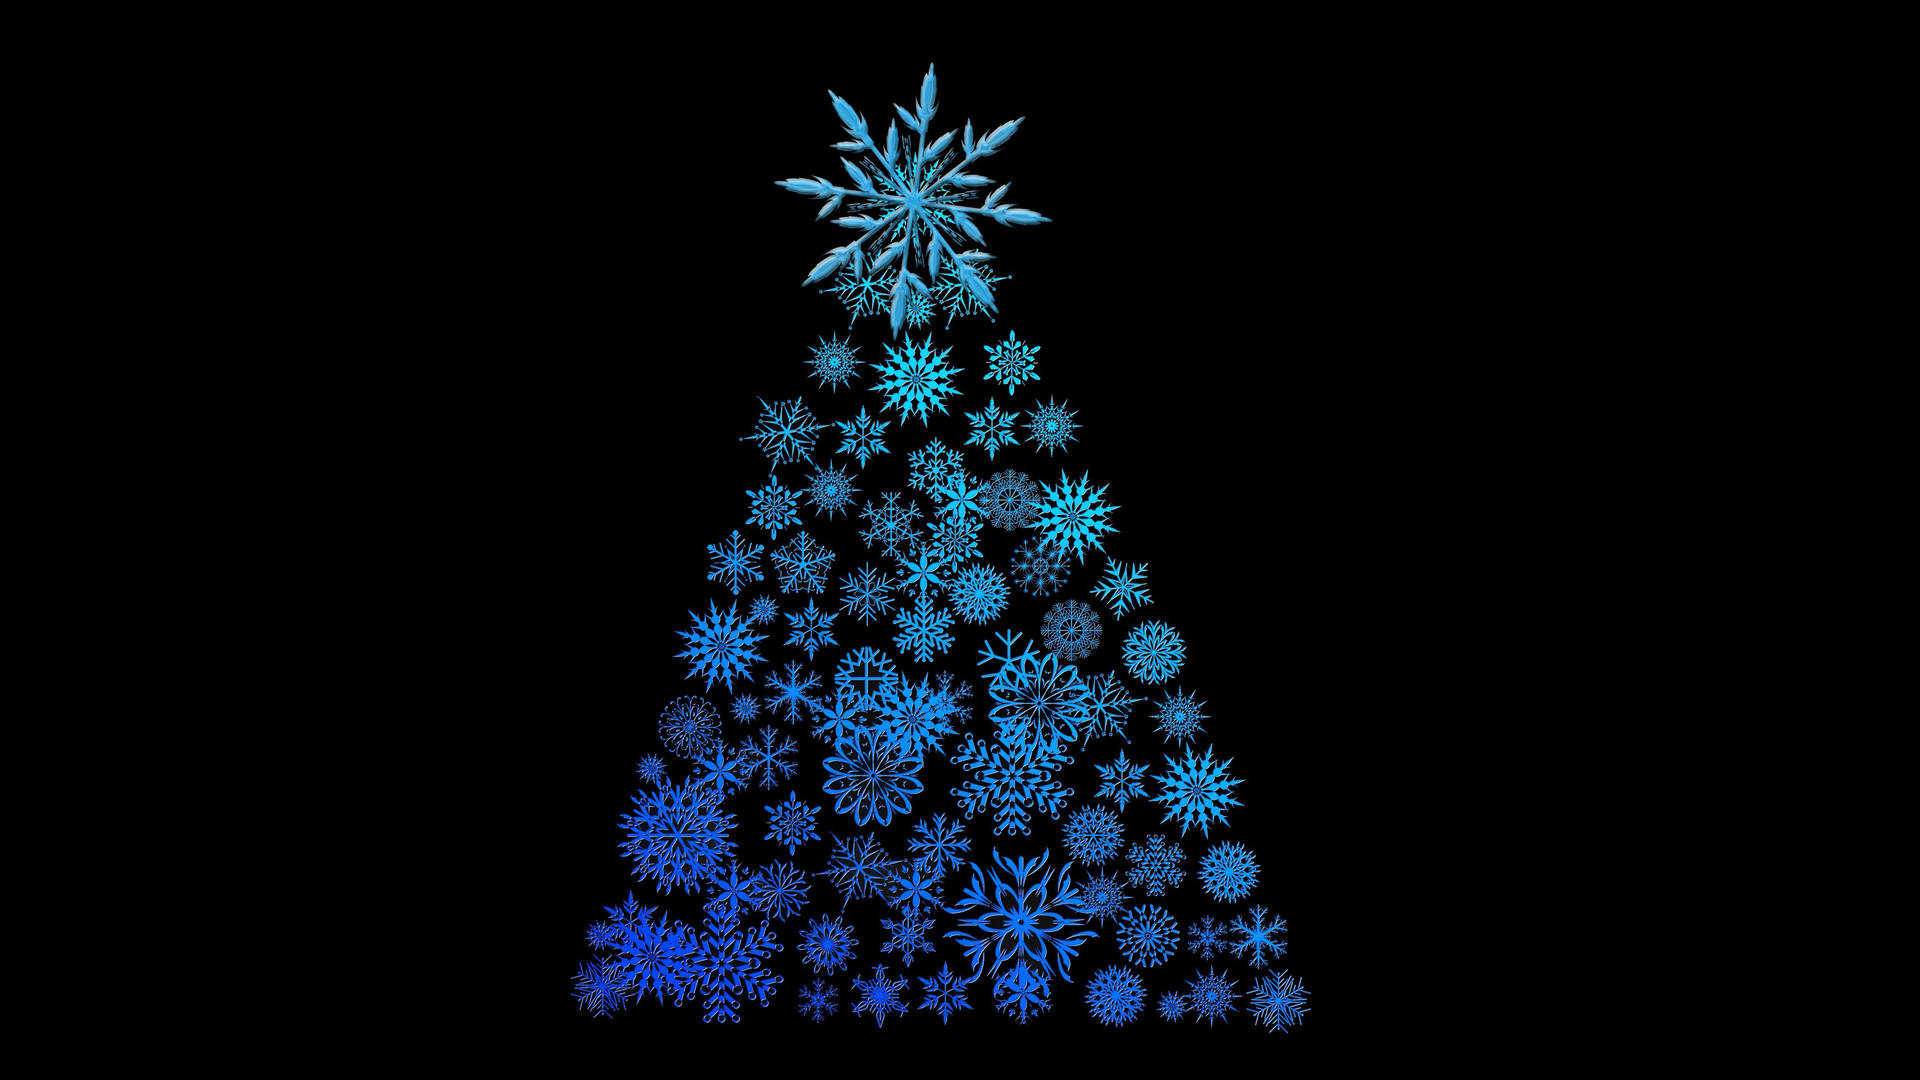 Magical Christmas Snowflakes in 4K Ultra HD Wallpaper